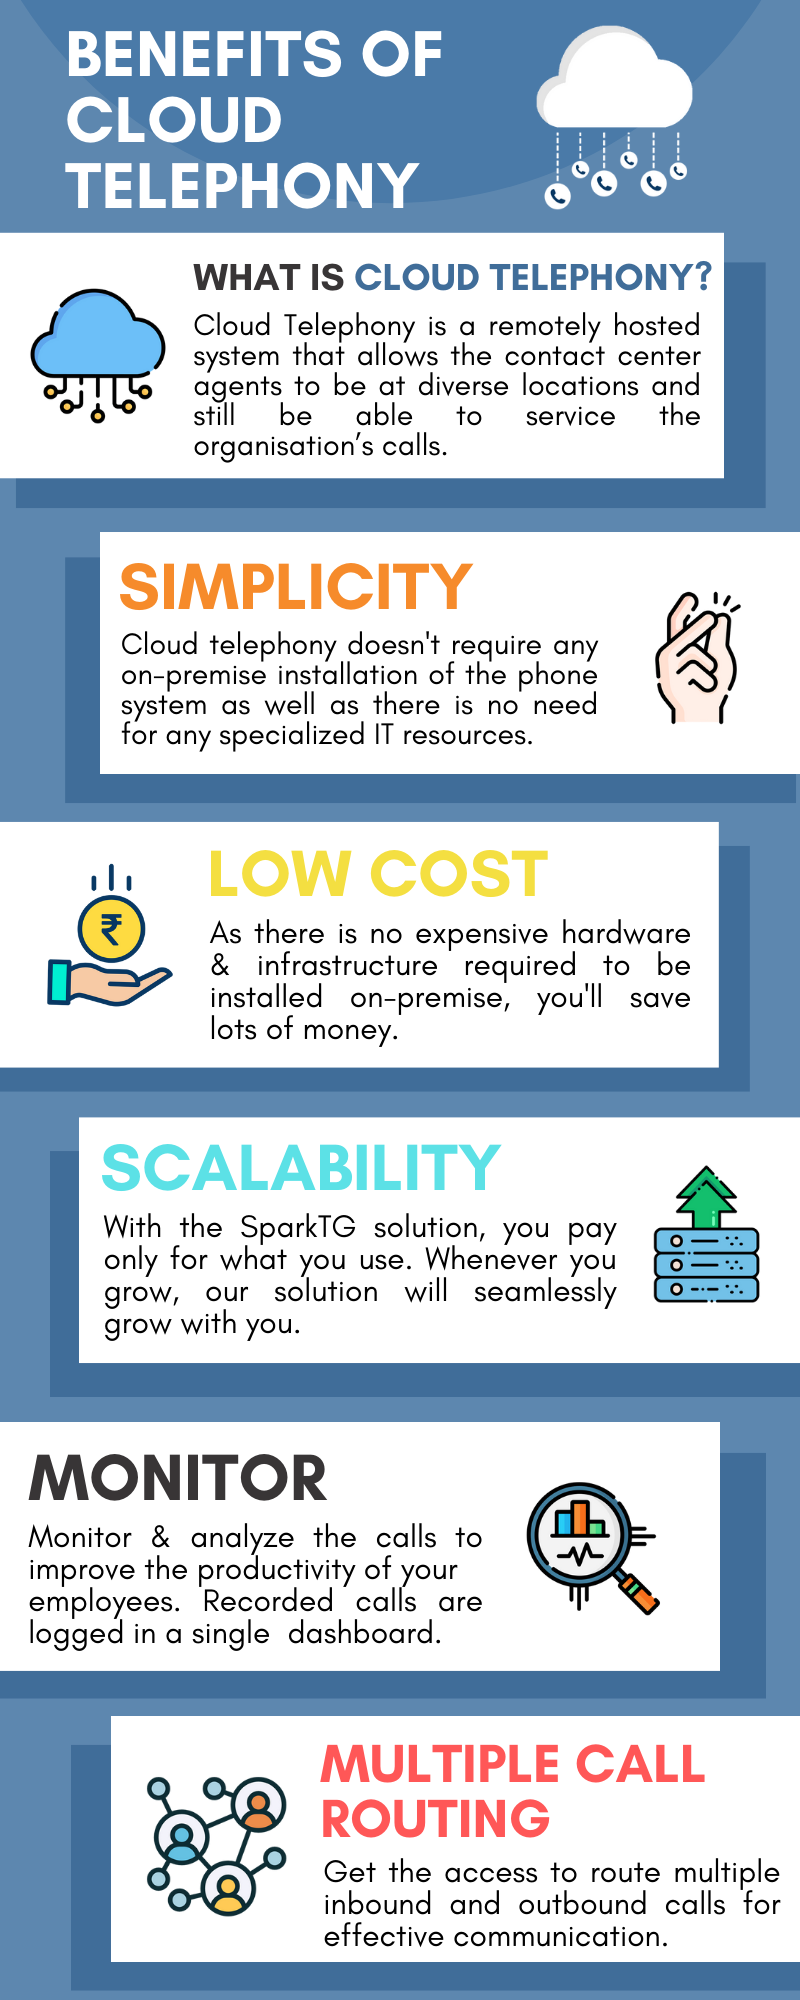 Top 5 Benefits of Cloud Telephony